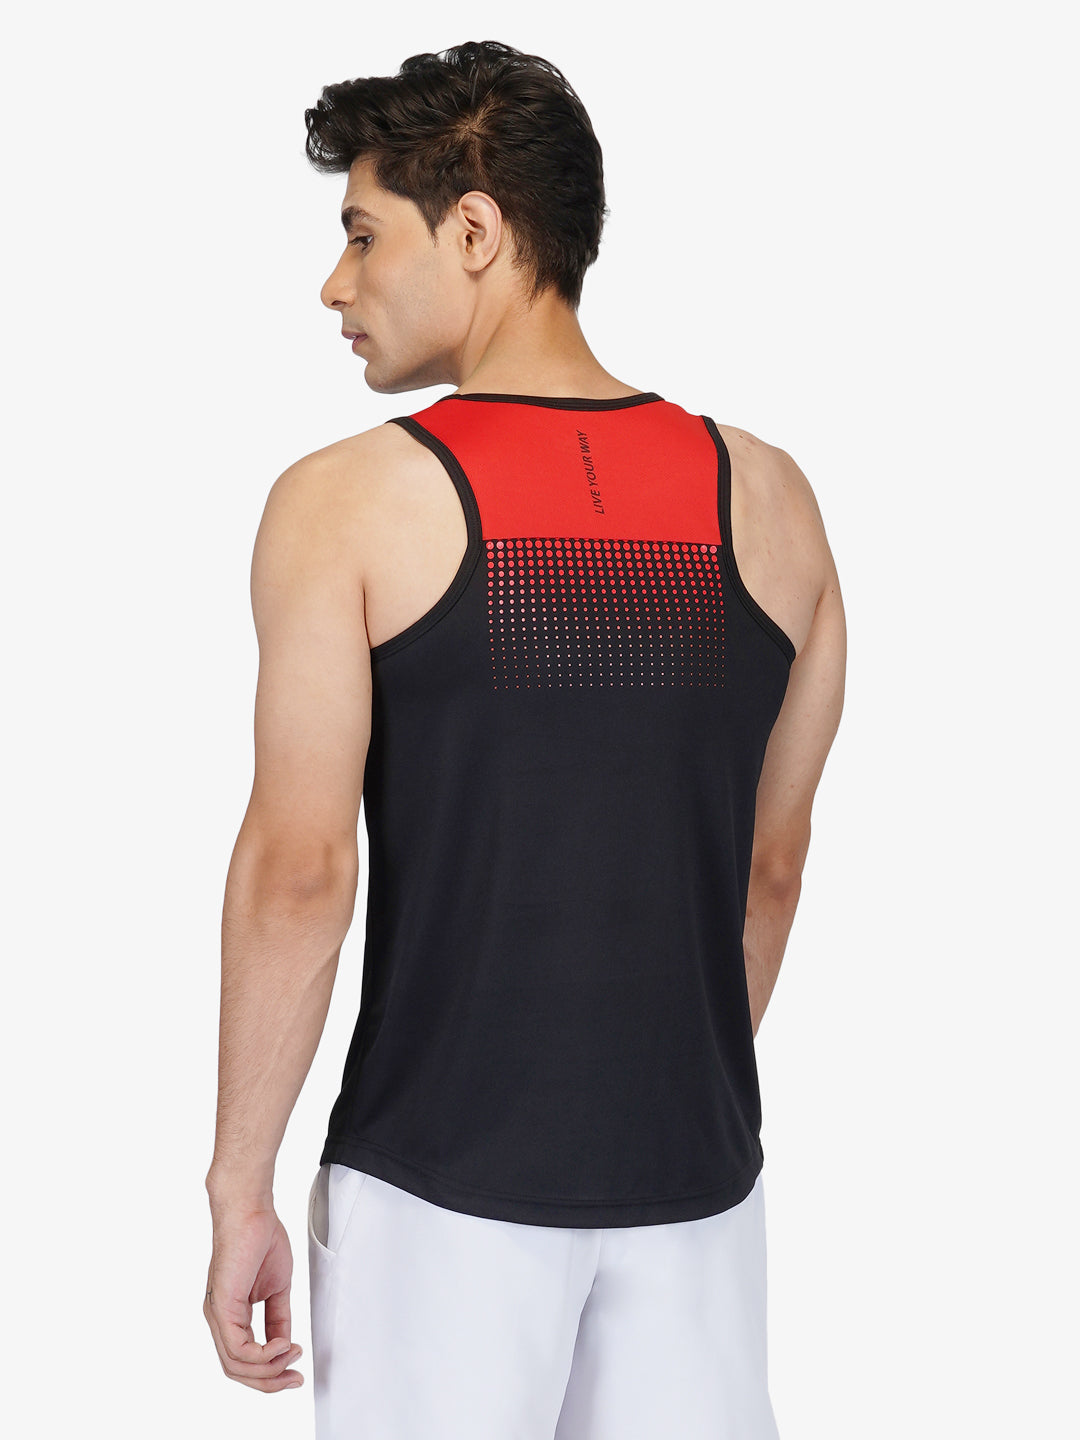 DriDOT Designer Vest Black And Red Men RWM4030